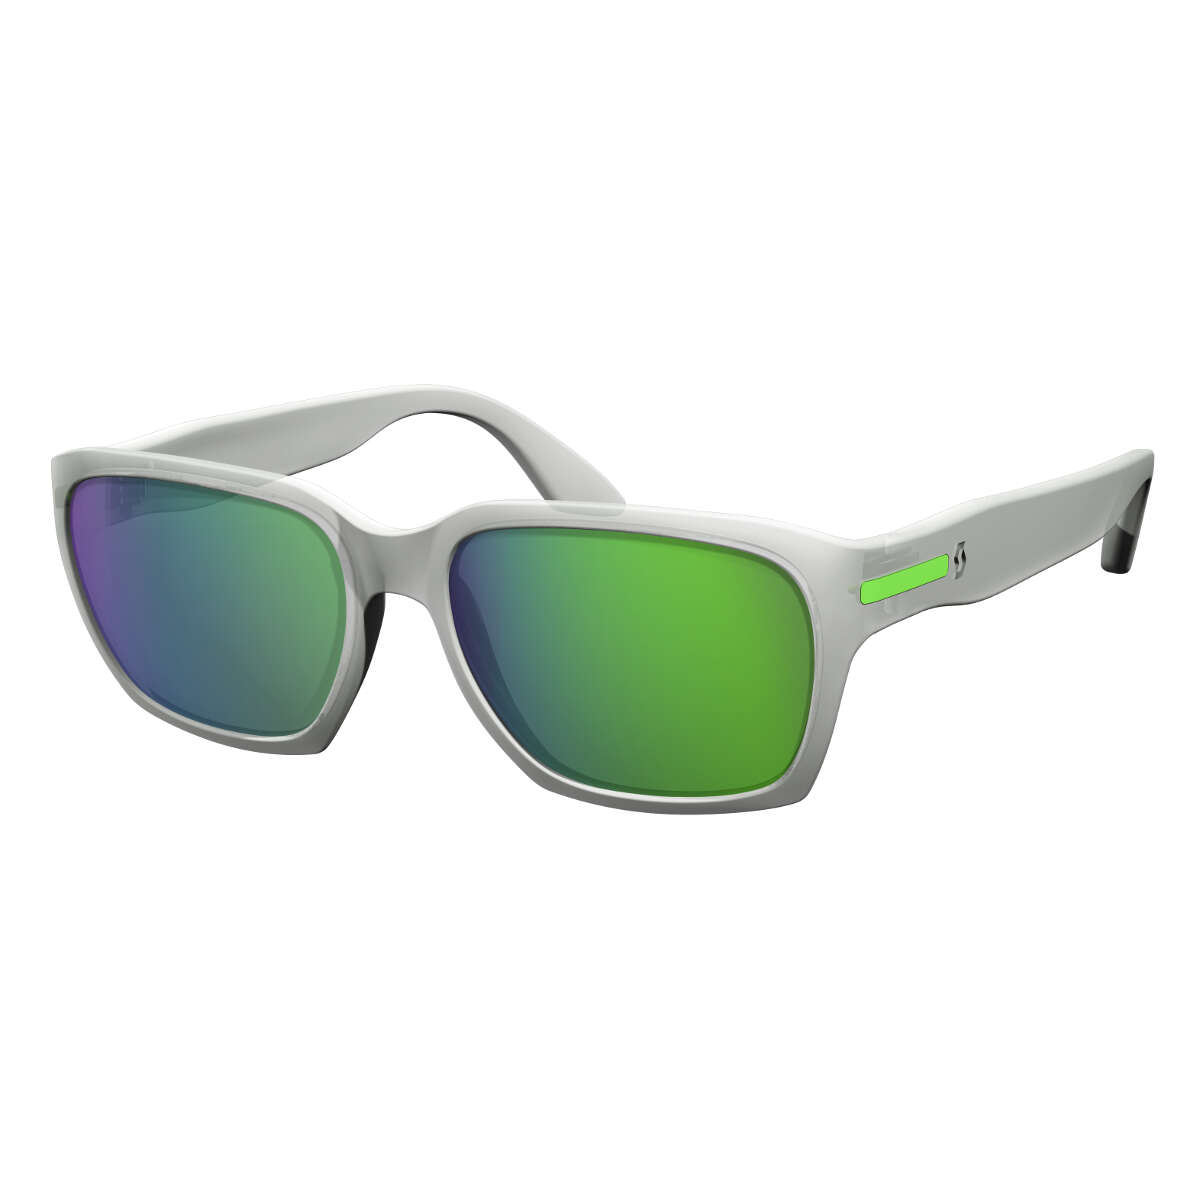 Scott Sunglasses C-Note Grey/Green - Green Chrome